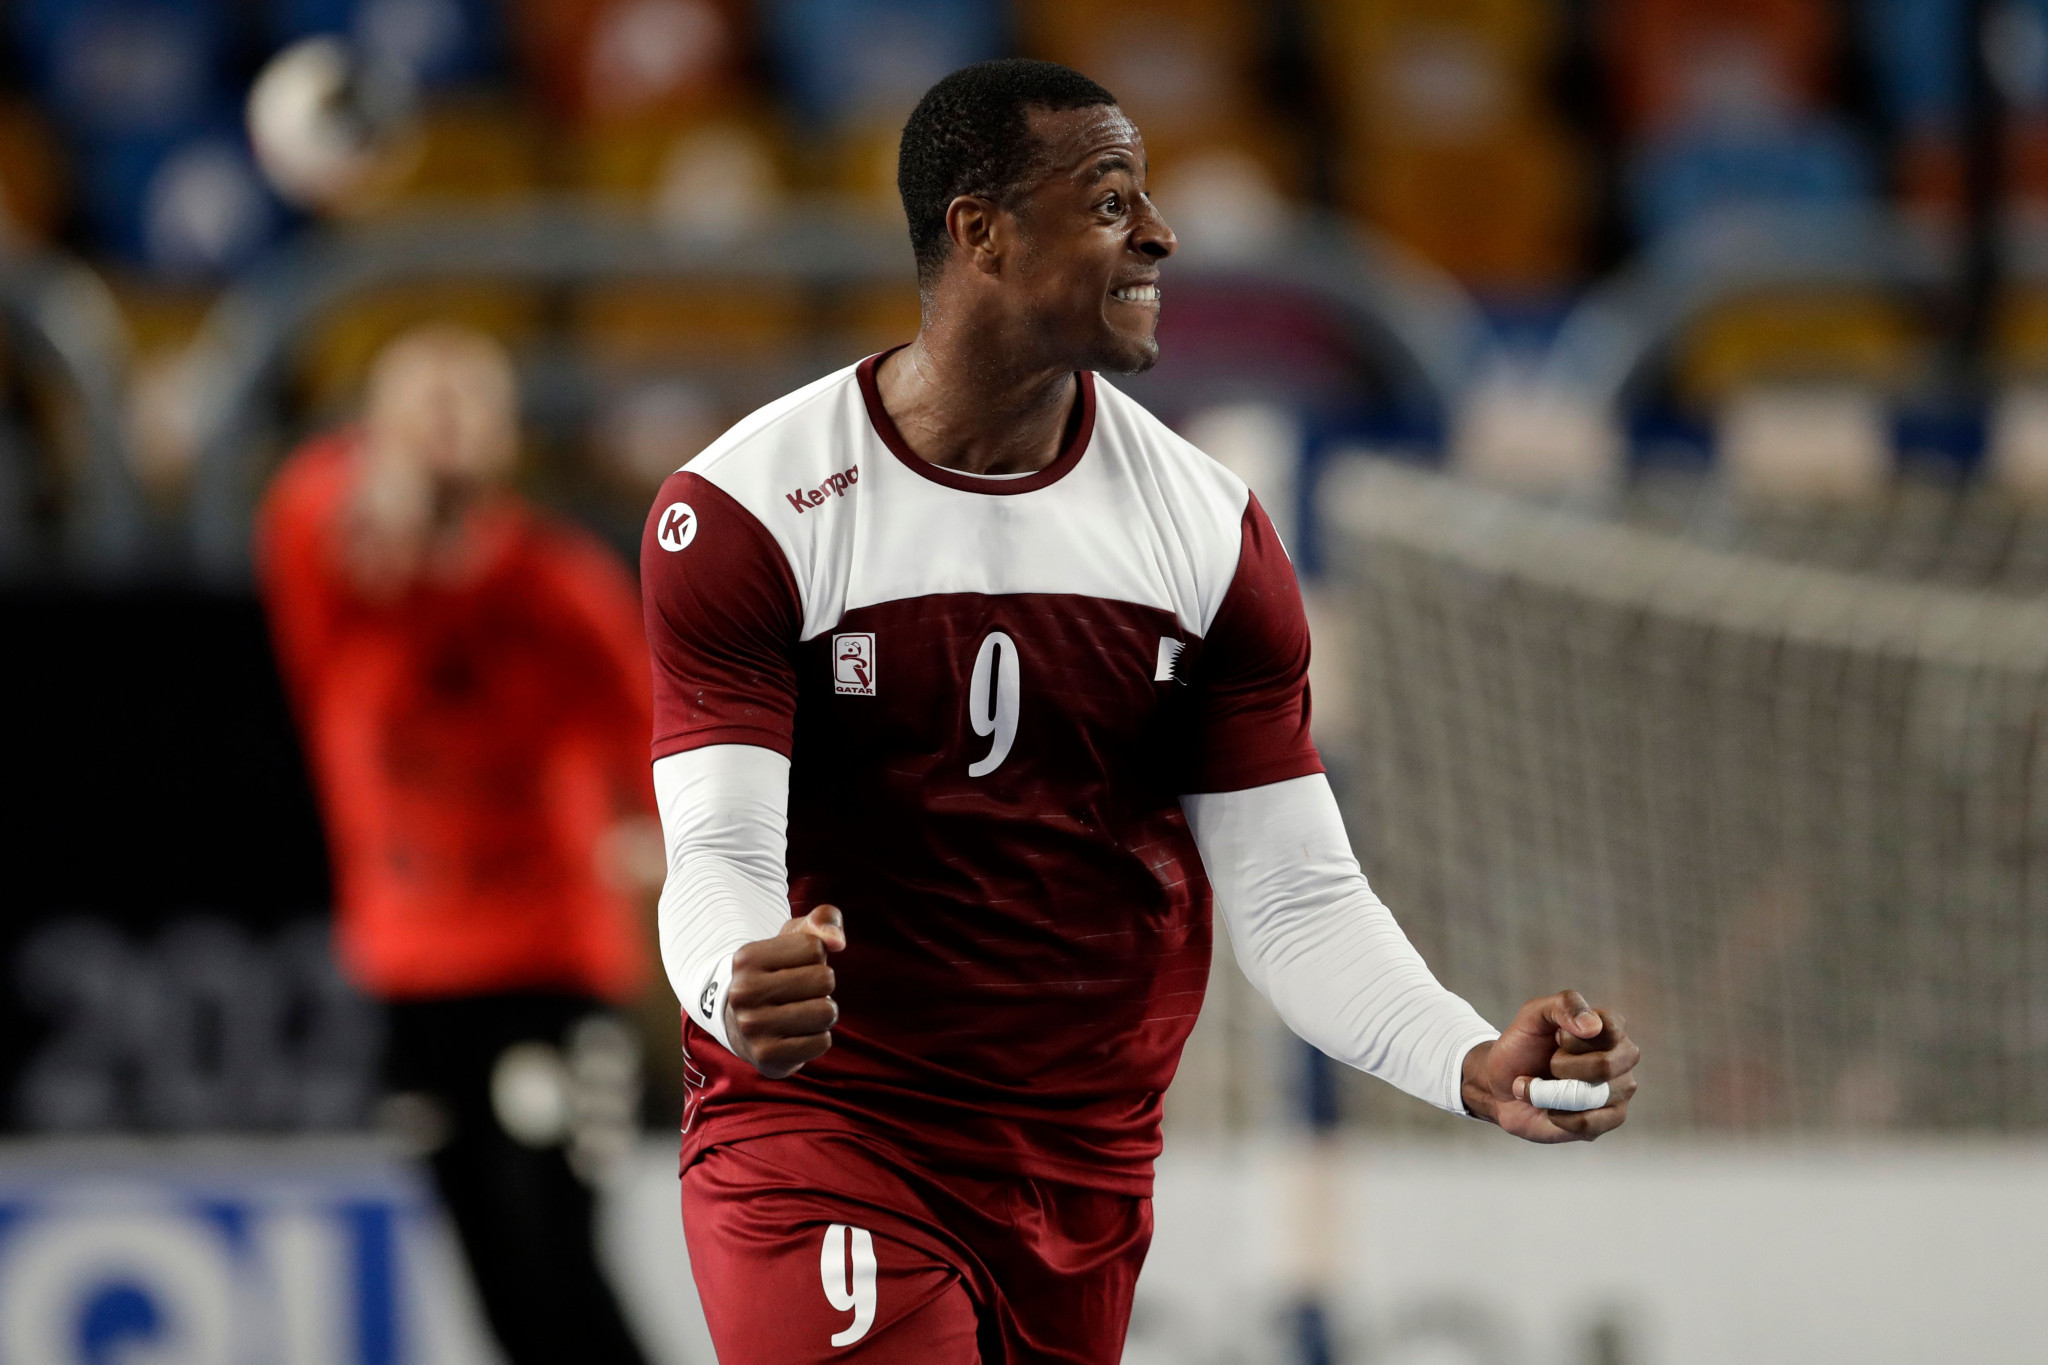 Qatar beat Iran to progress to the final of the Asian Men's Handball Championship ©Getty Images